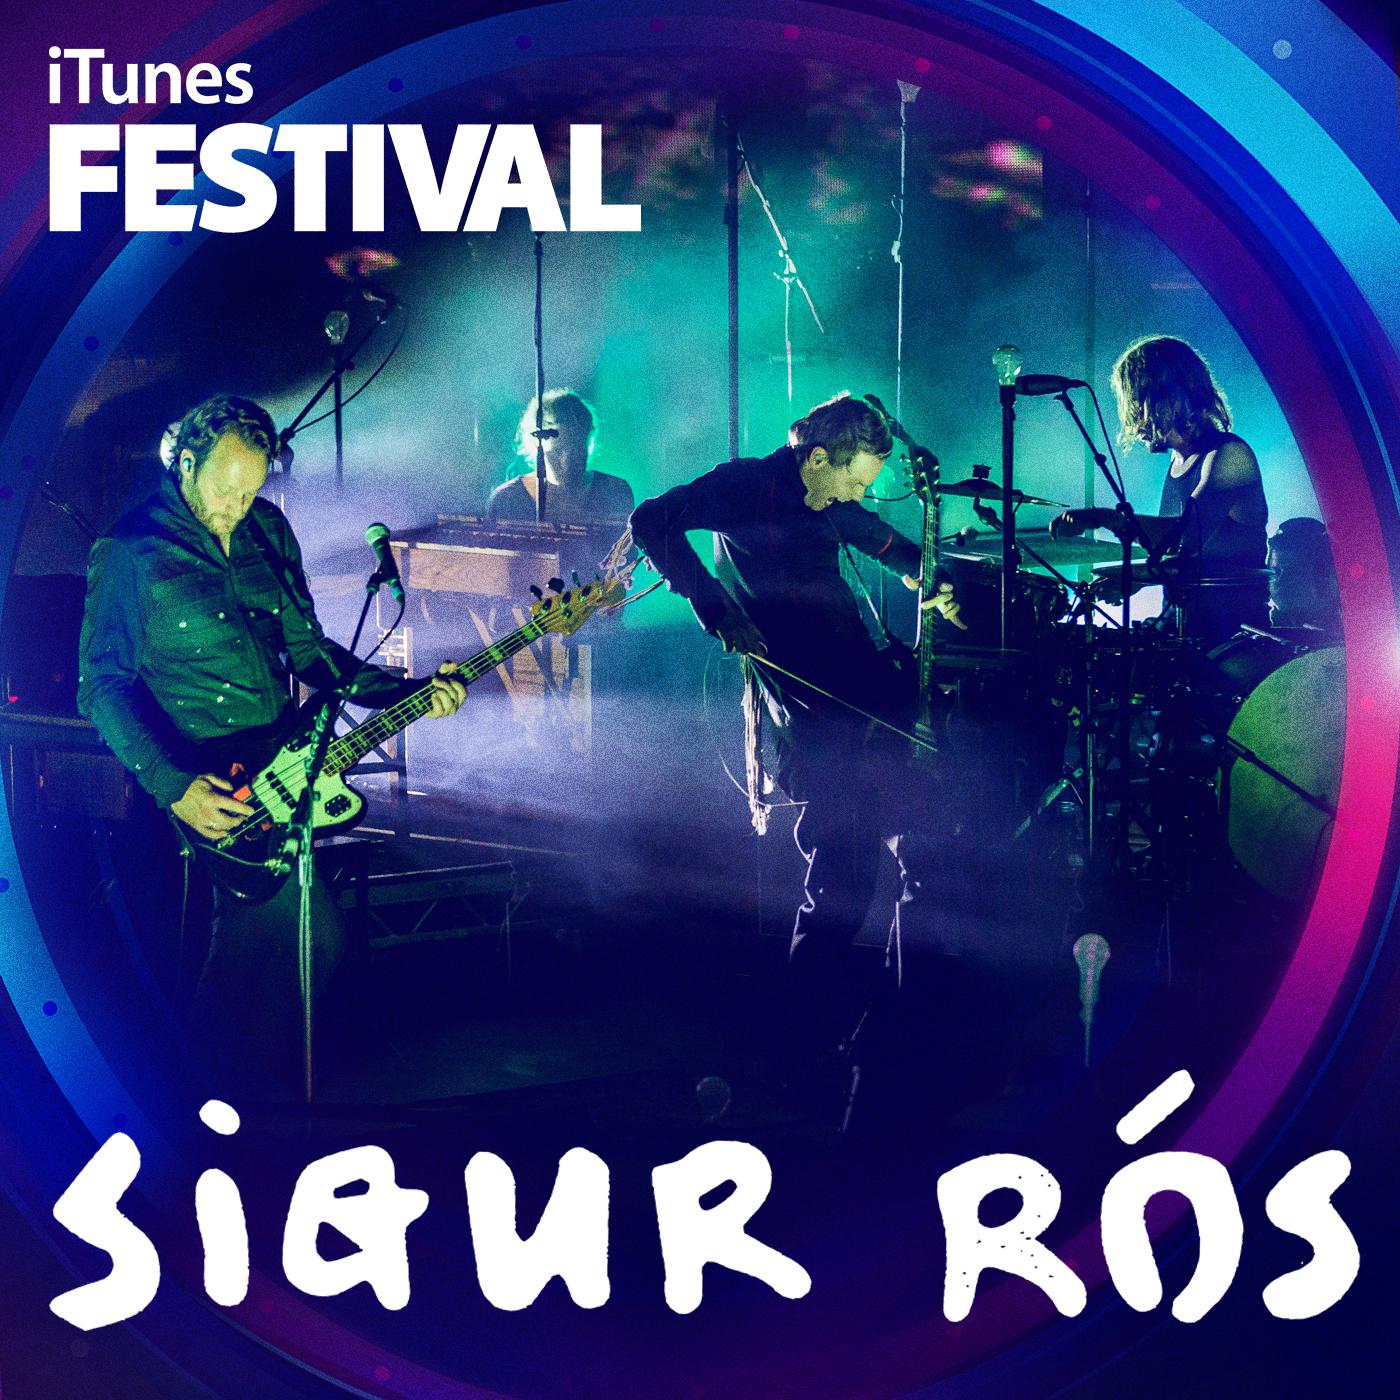 iTunes Festival: London 2013专辑